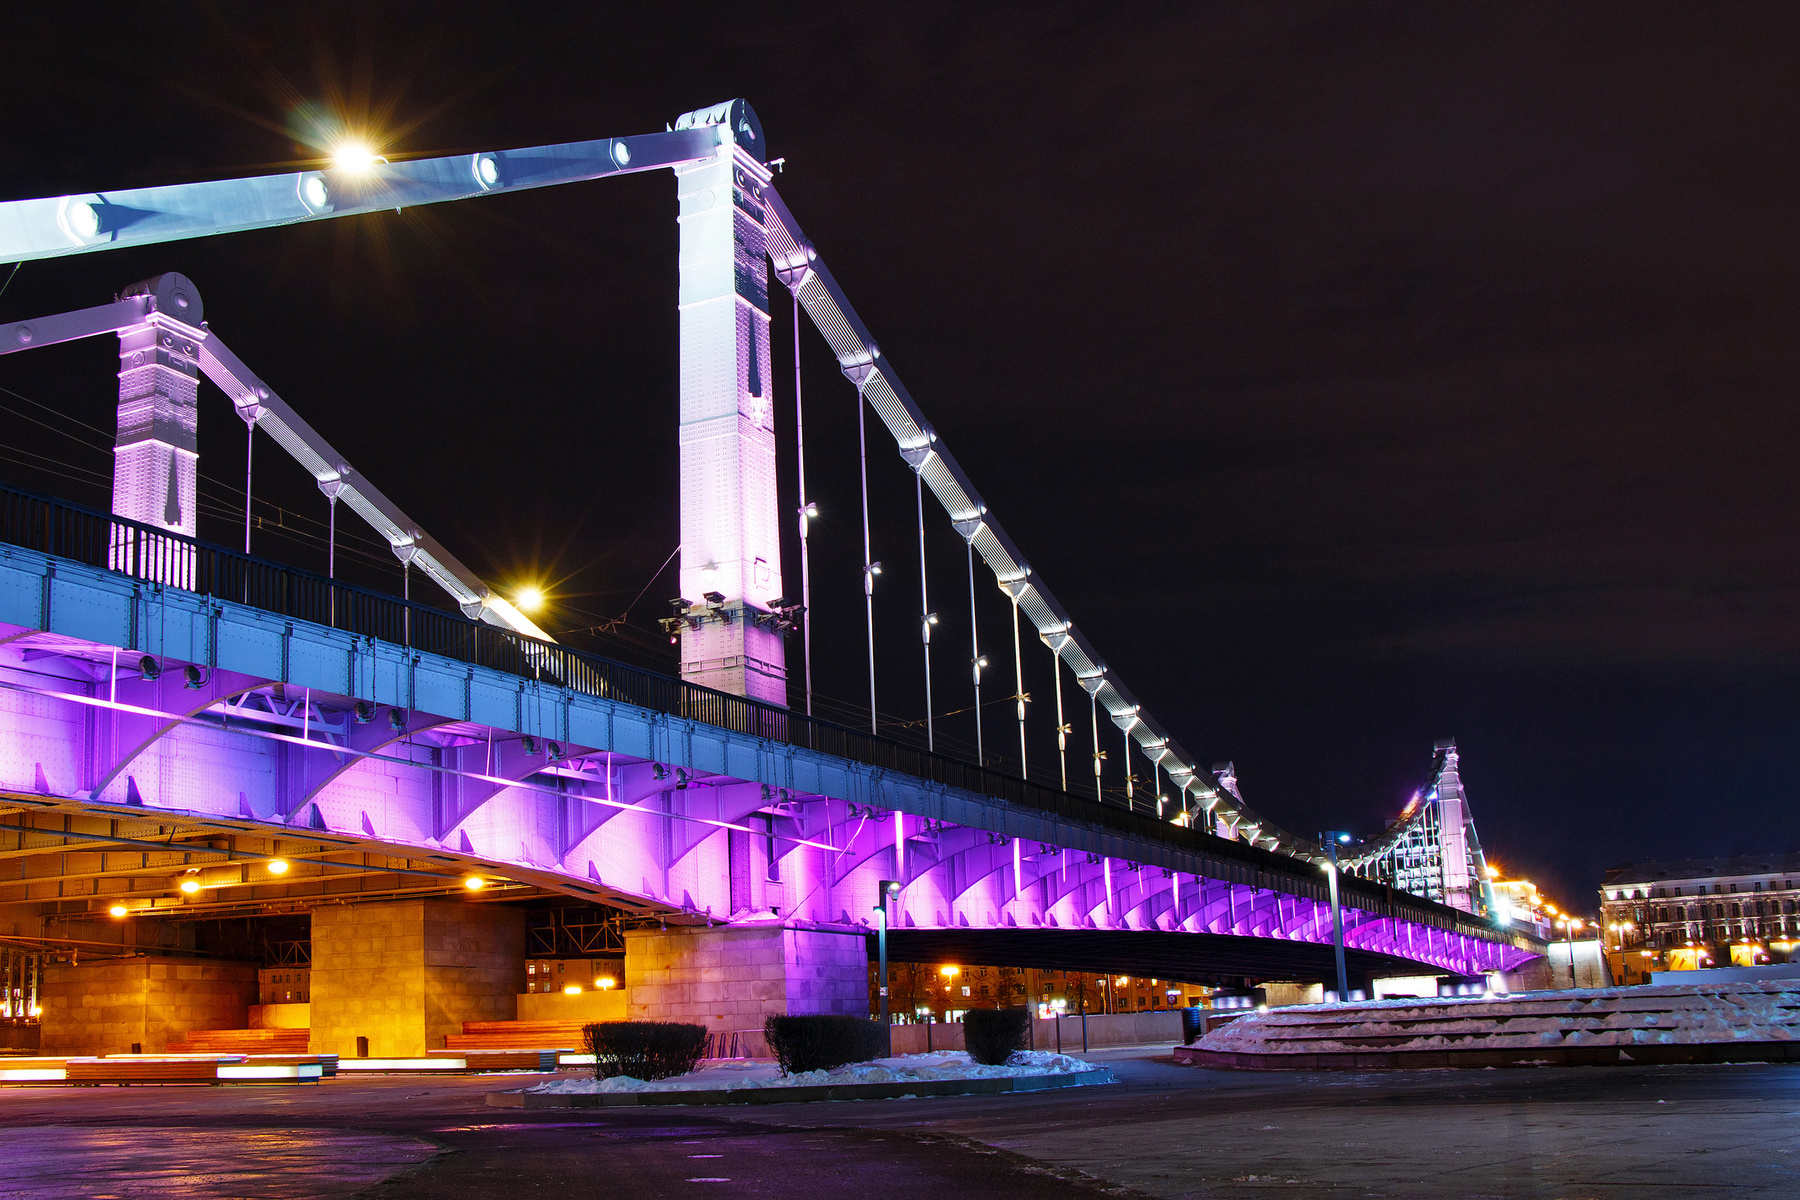 Пустота ночного города. город ночь пустота мост Москва фонари подсветка иллюминация дорога